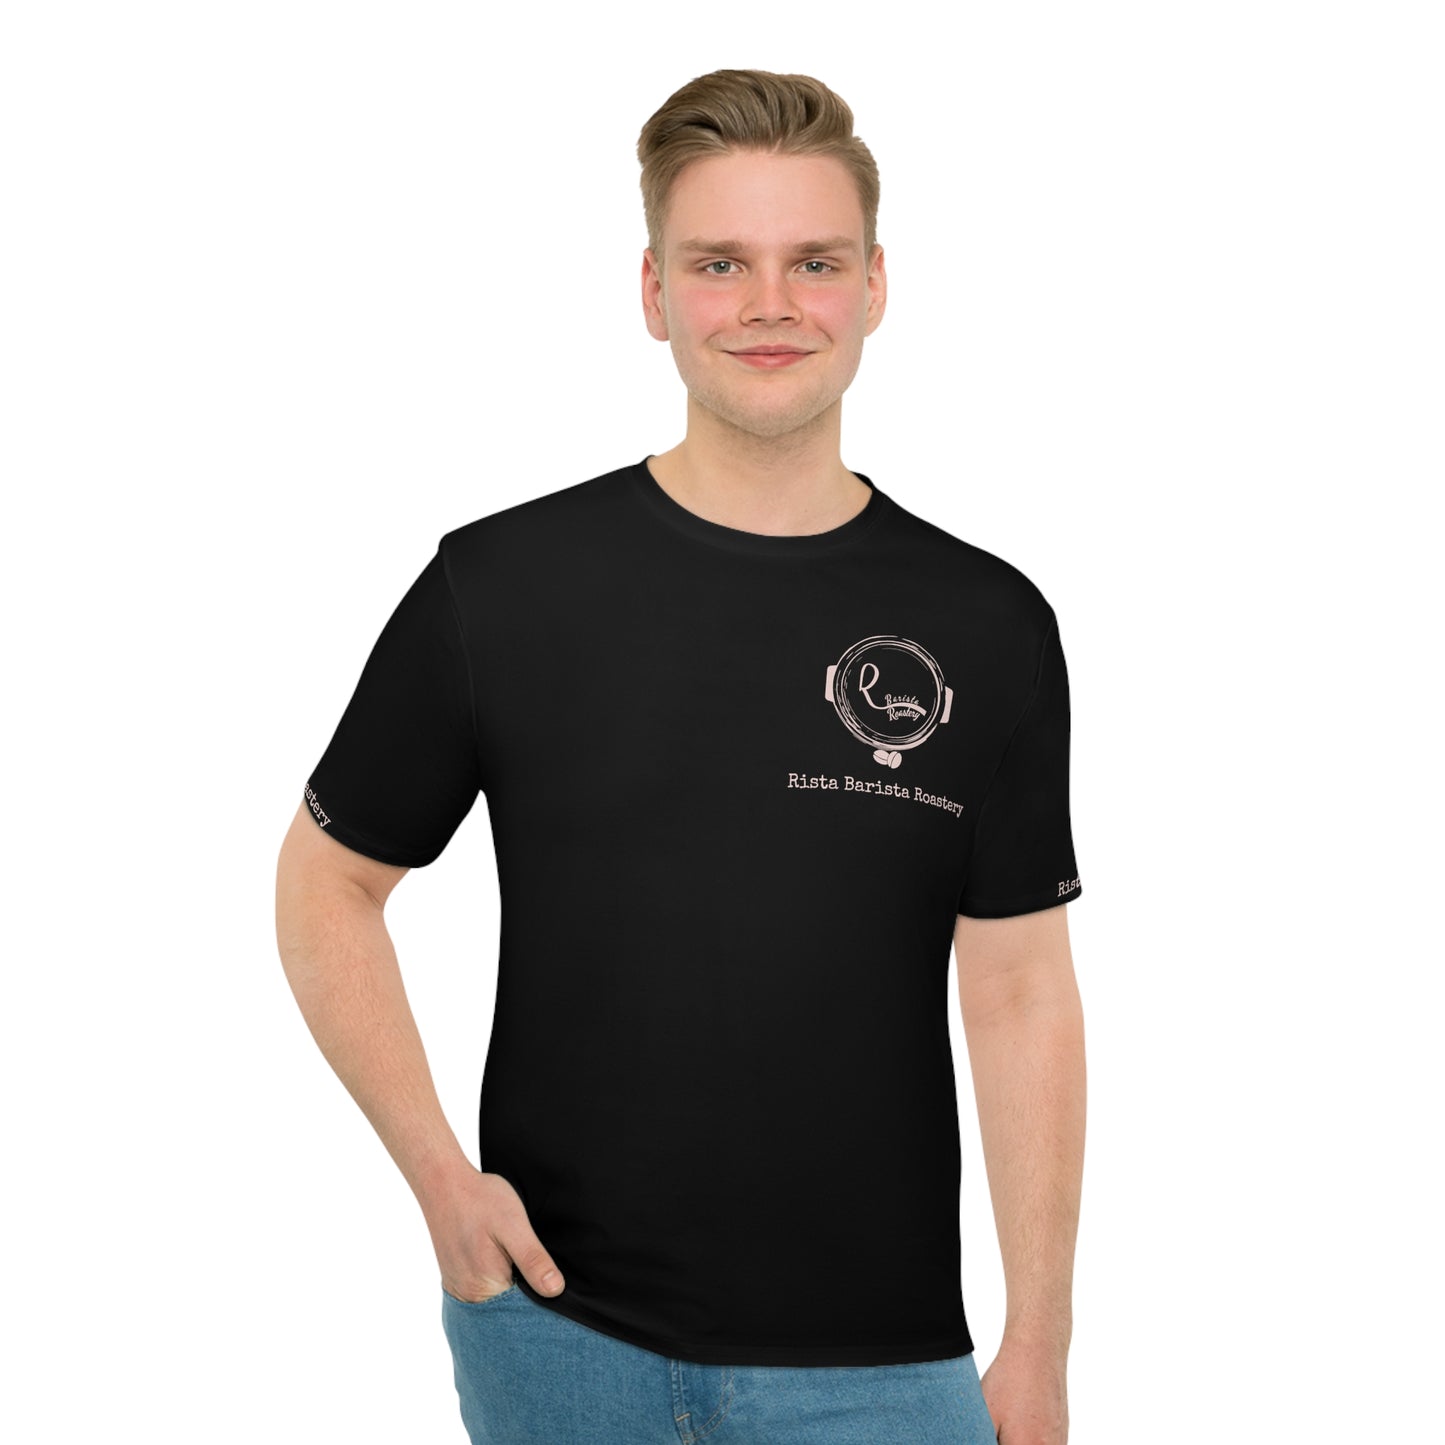 Futuristic Barista Design T-Shirt